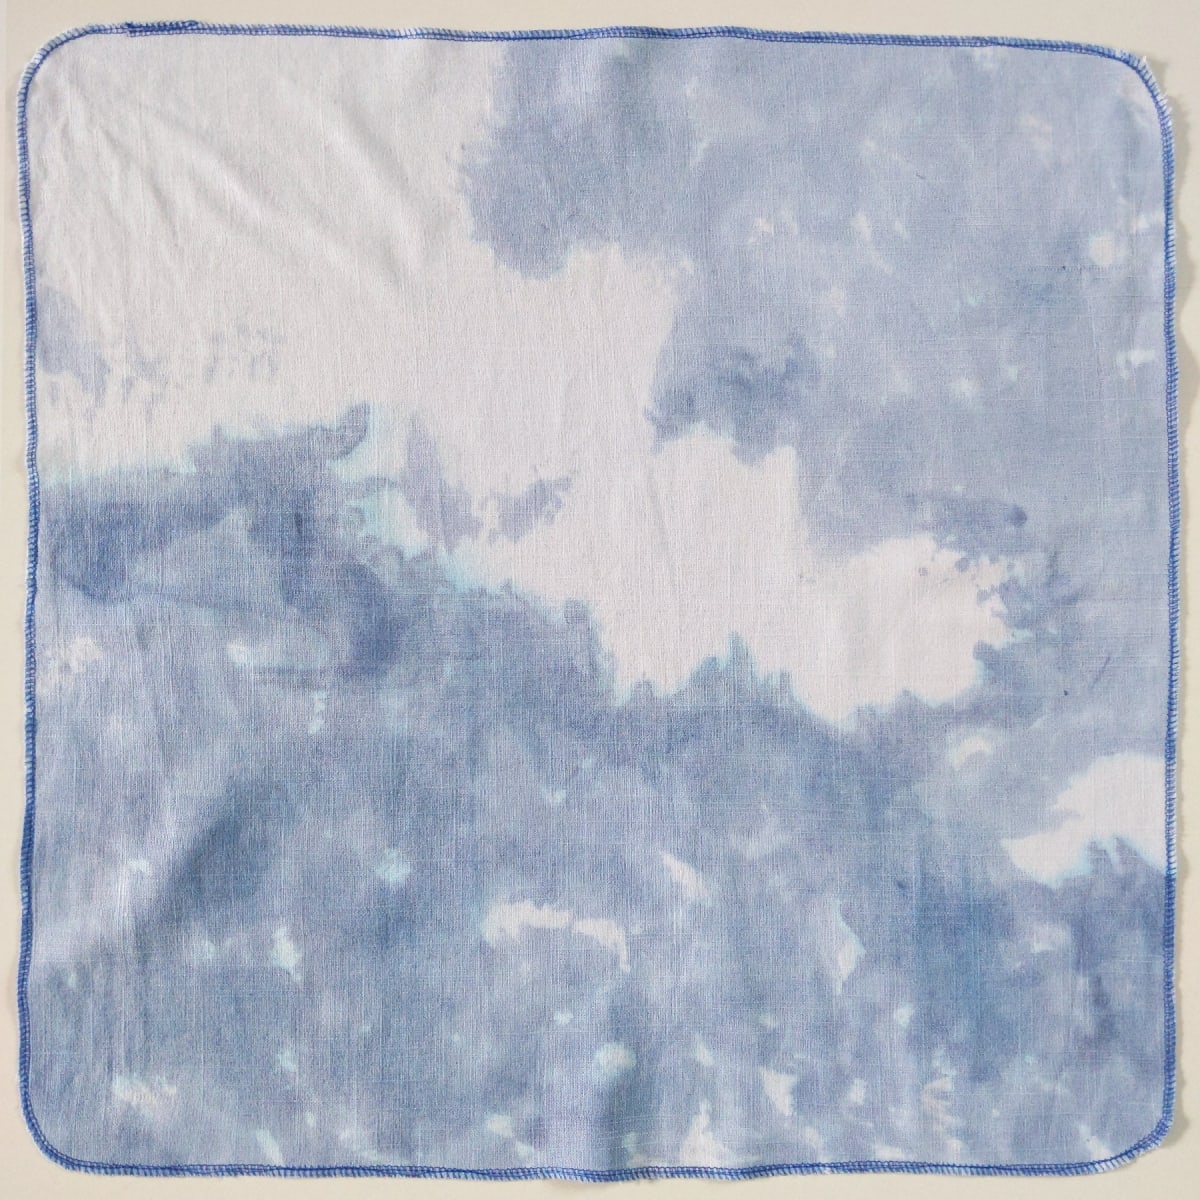 Cloud dyed napkins #11 by Savannah Jubic 